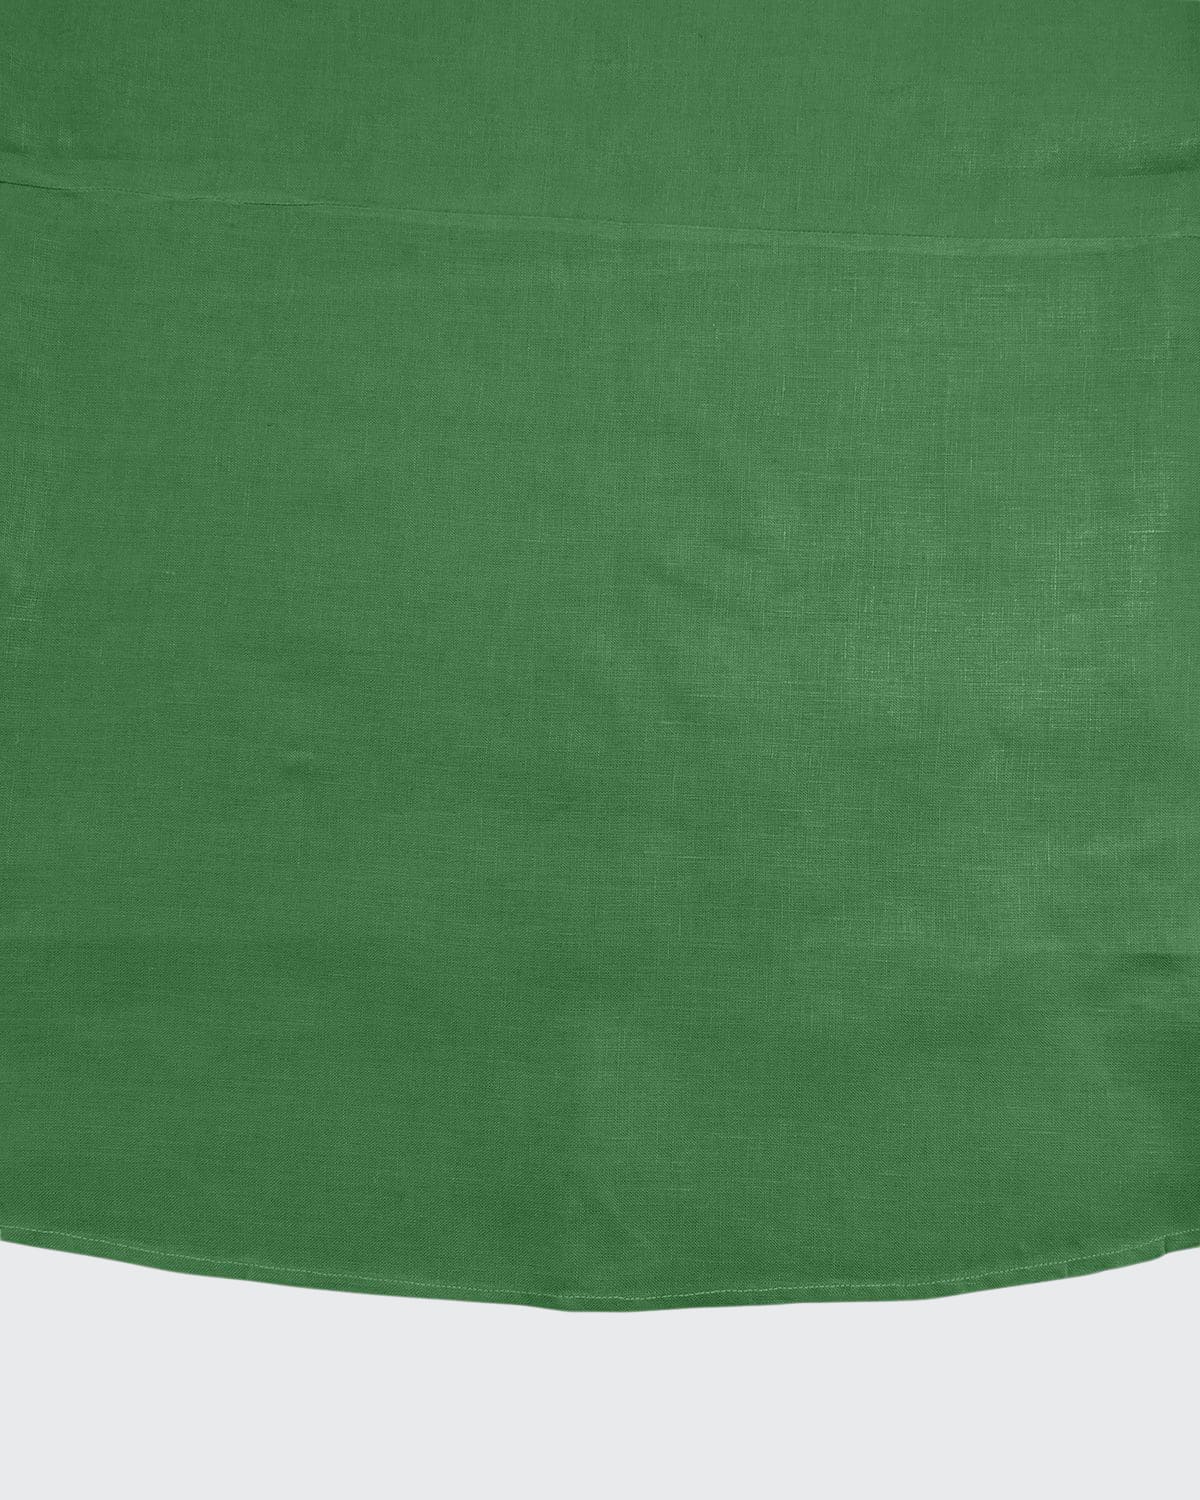 Sferra Hemstitch Round Tablecloth, 90"dia. In Green